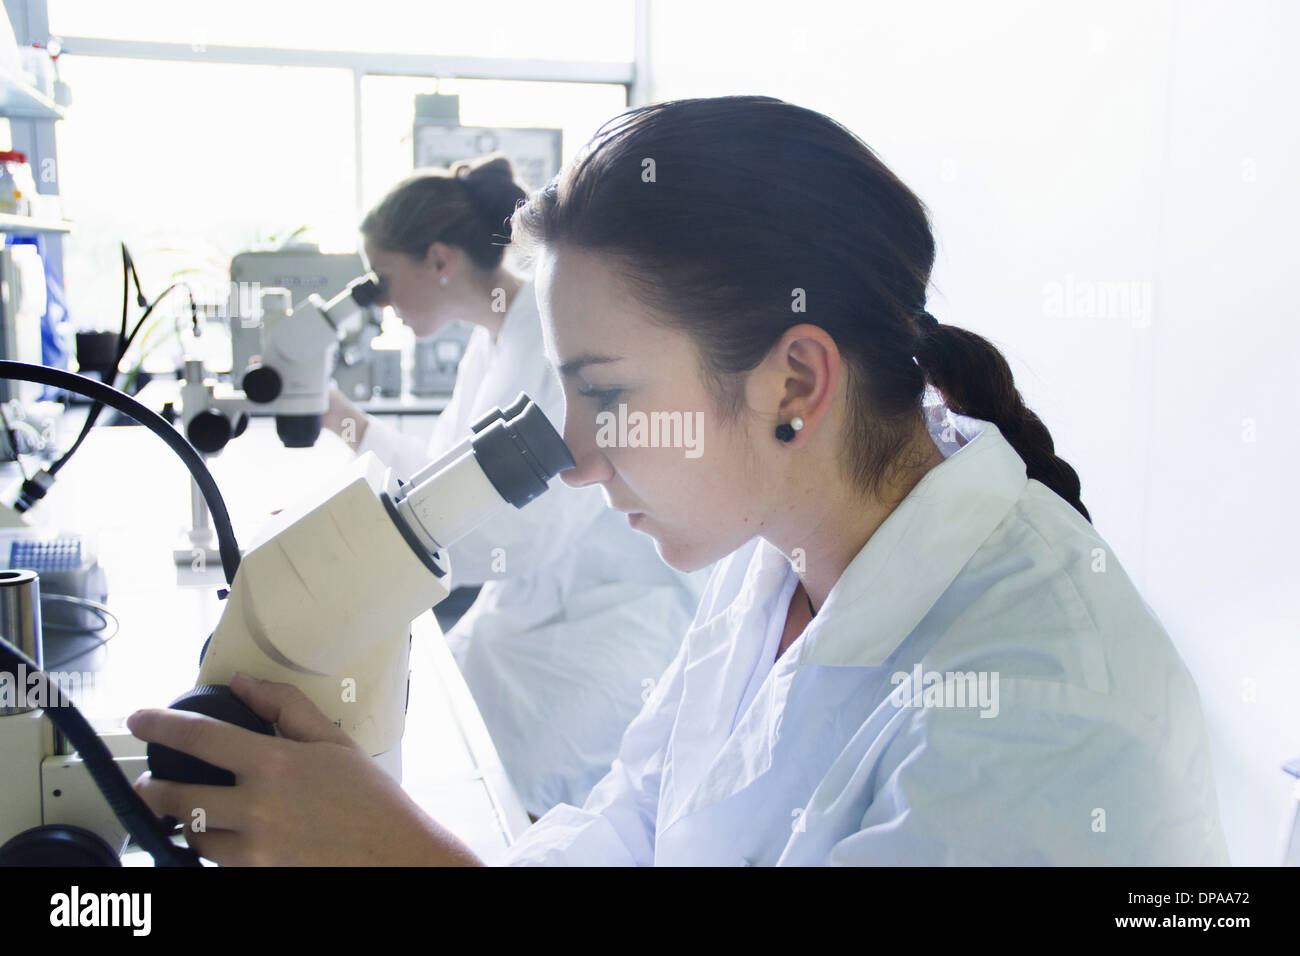 Biology students using microscopes Stock Photo